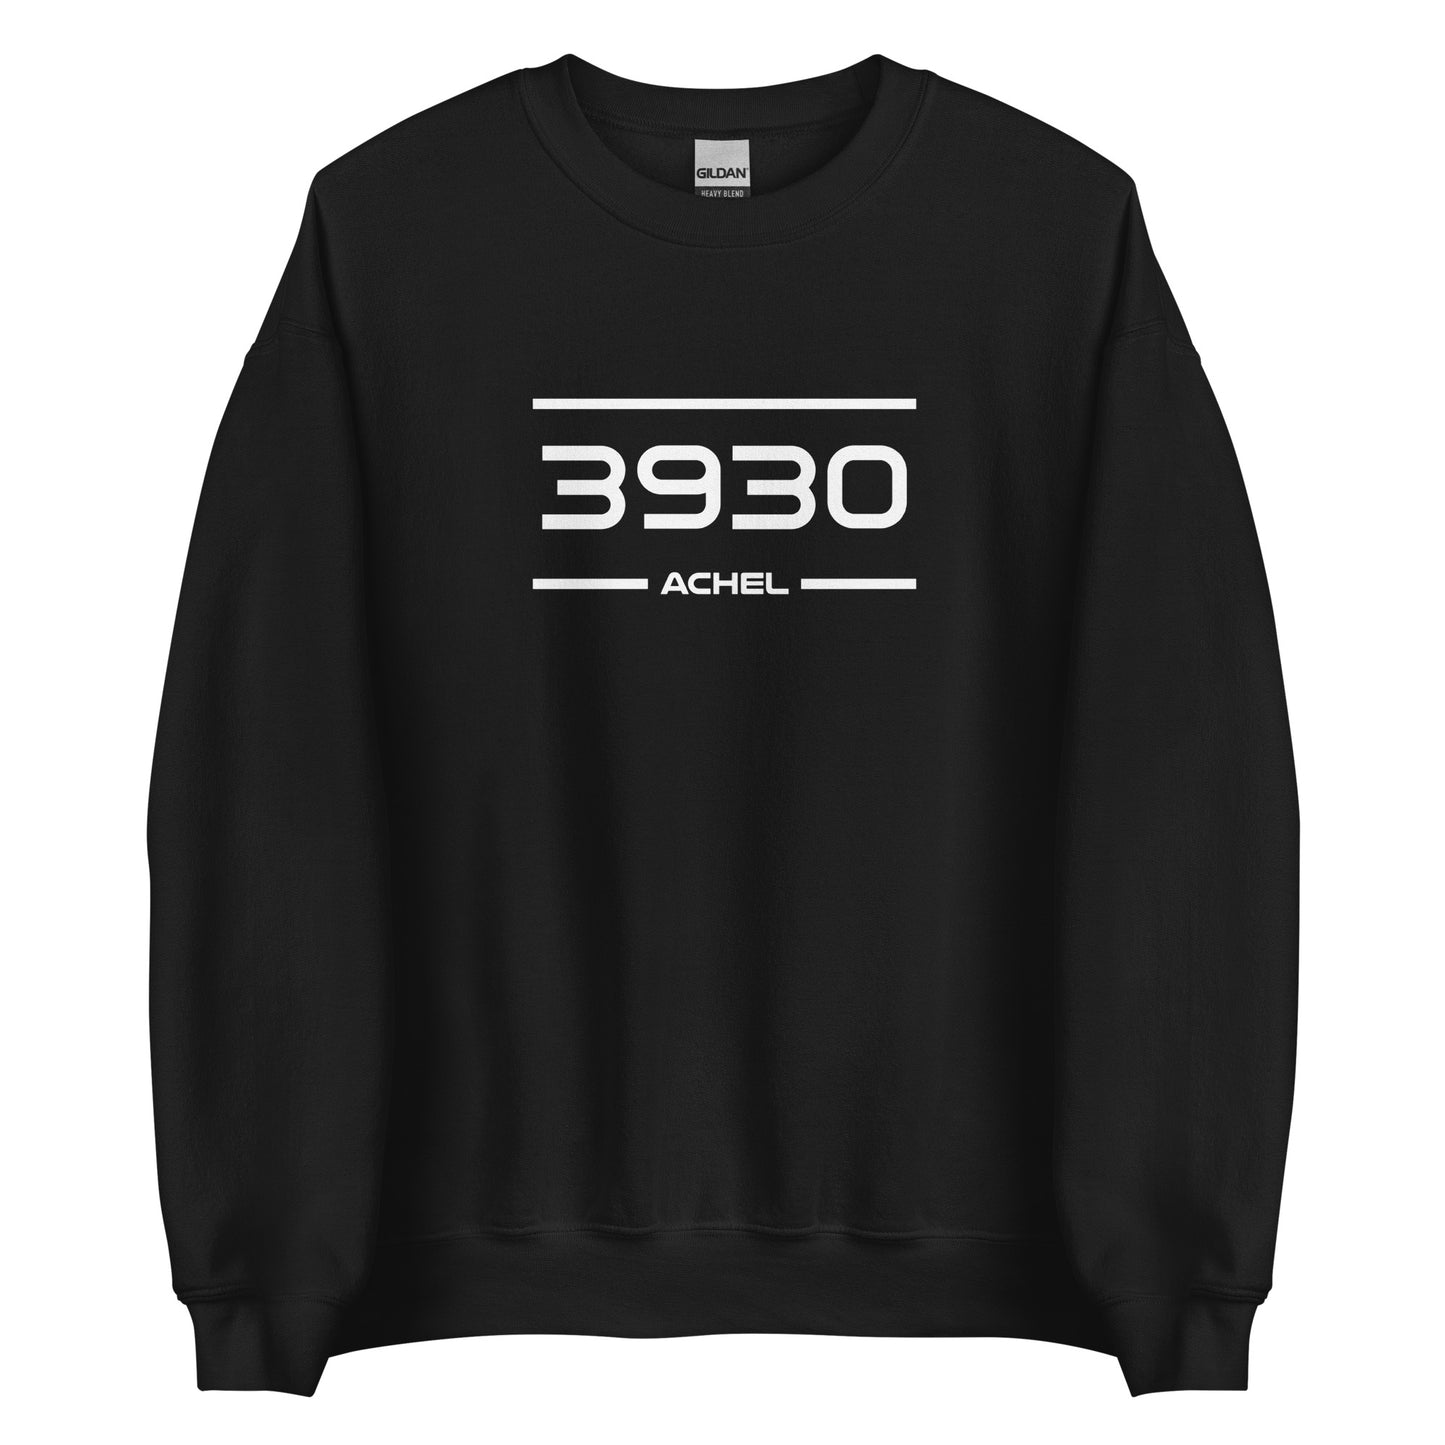 Sweater - 3930 - Achel (M/V)